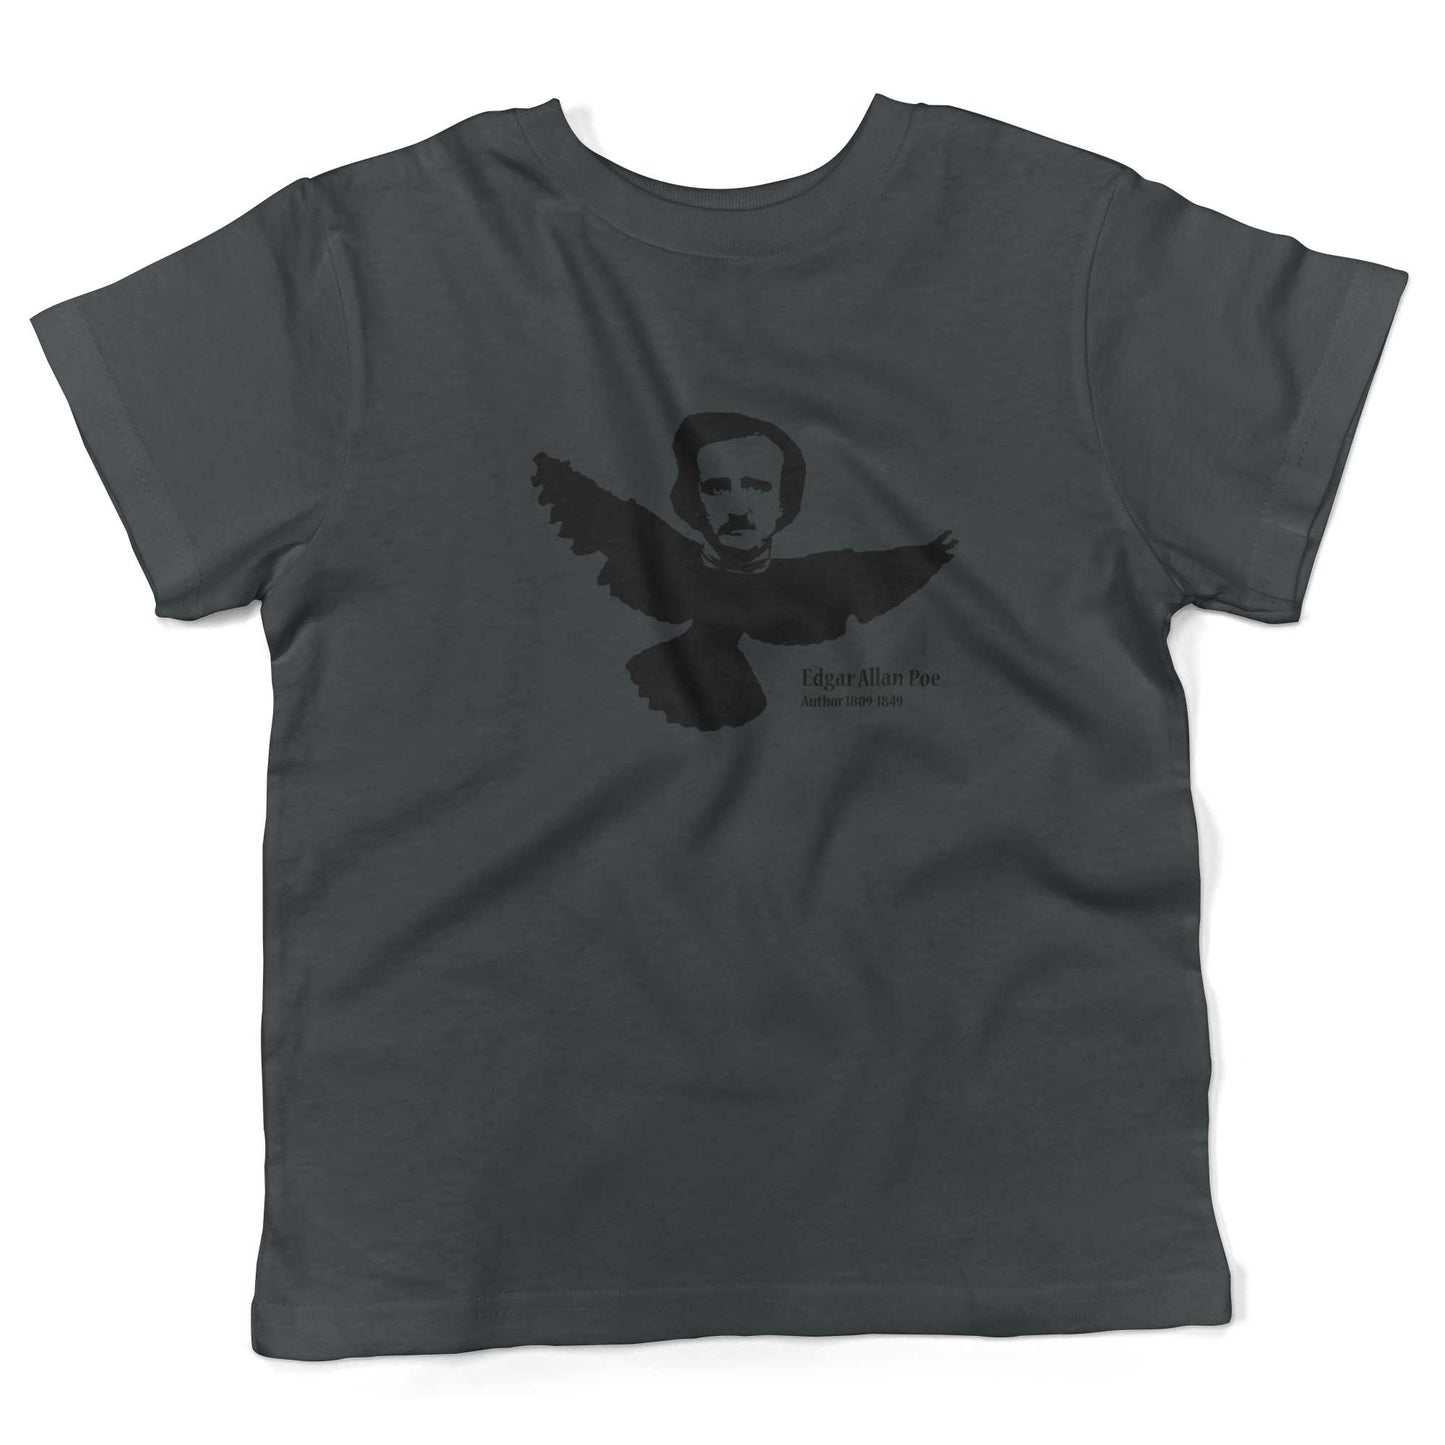 Edgar Allan Poe Toddler Shirt-Asphalt-2T